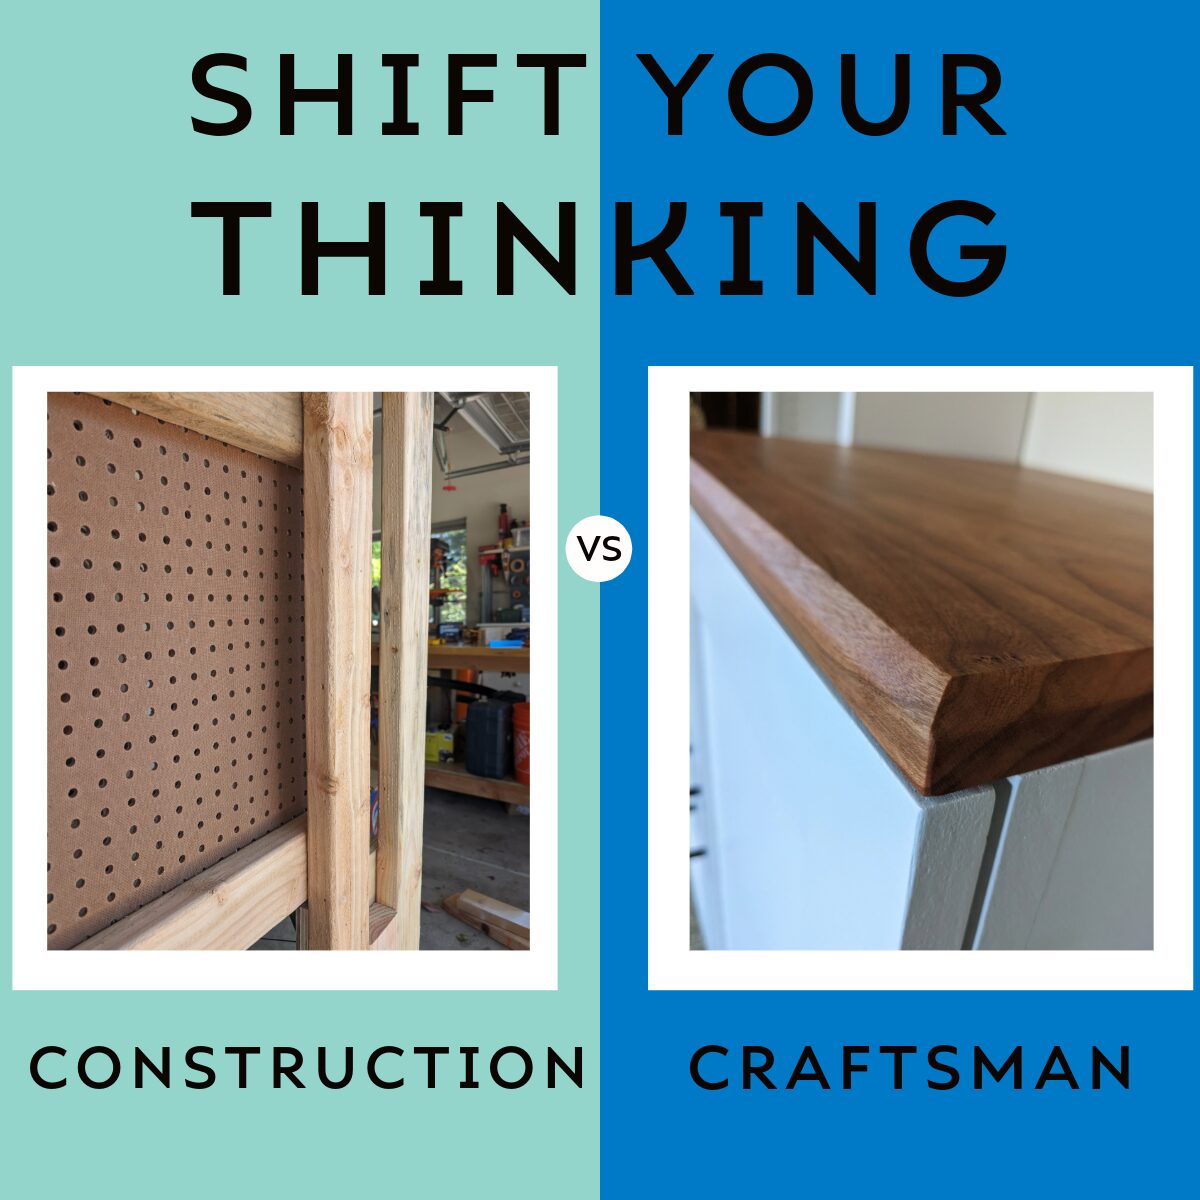 Cover art picture of construction versus craftsman